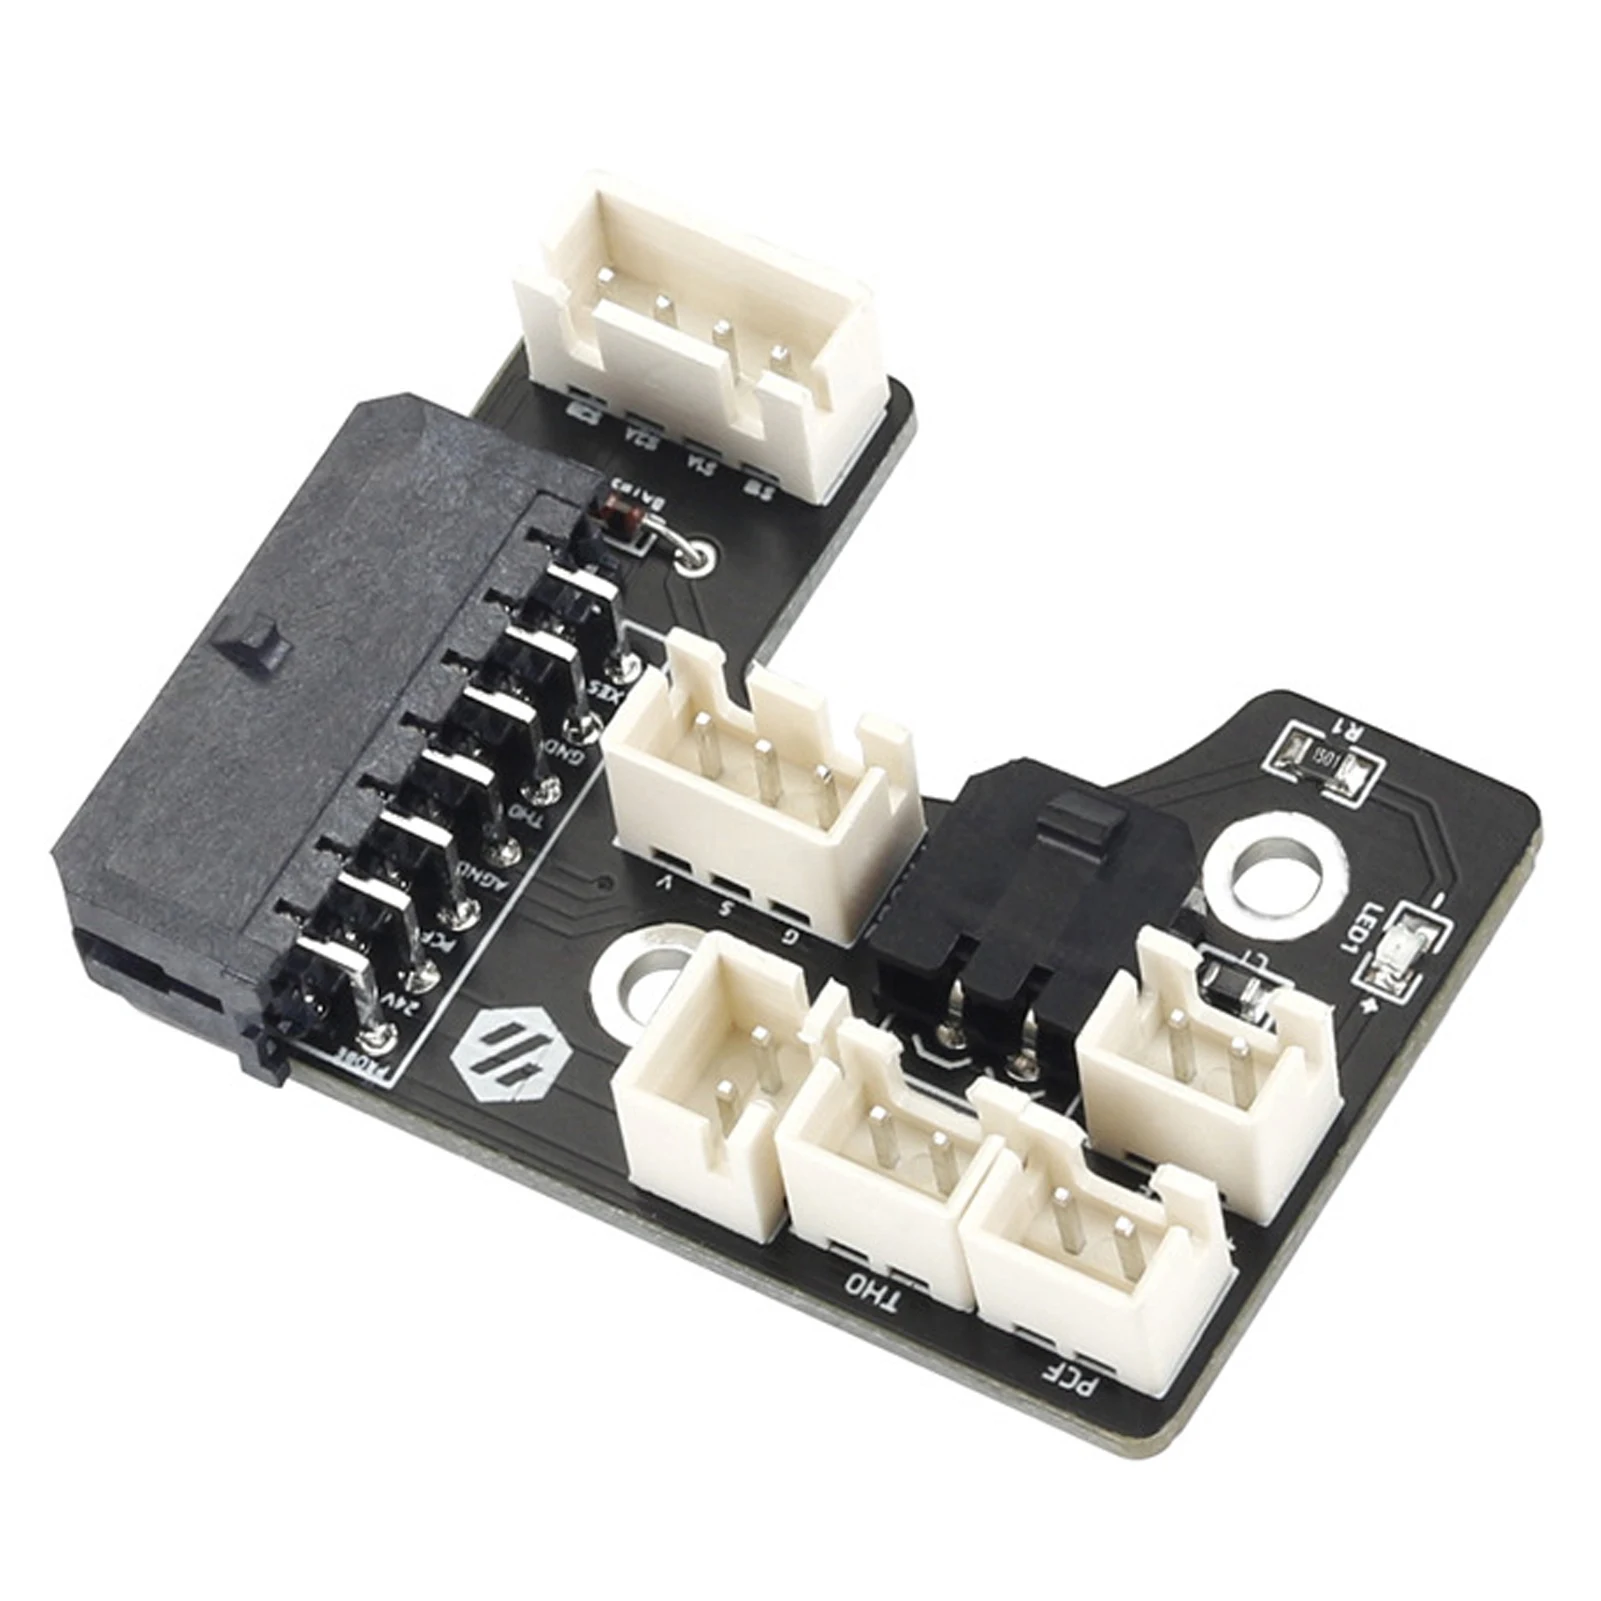 

3D Printer VORON V0.1/V0 HARTK AB Stepper Motor Control Board Expansion Board Circuit Extension Board 3D Printer Accessories